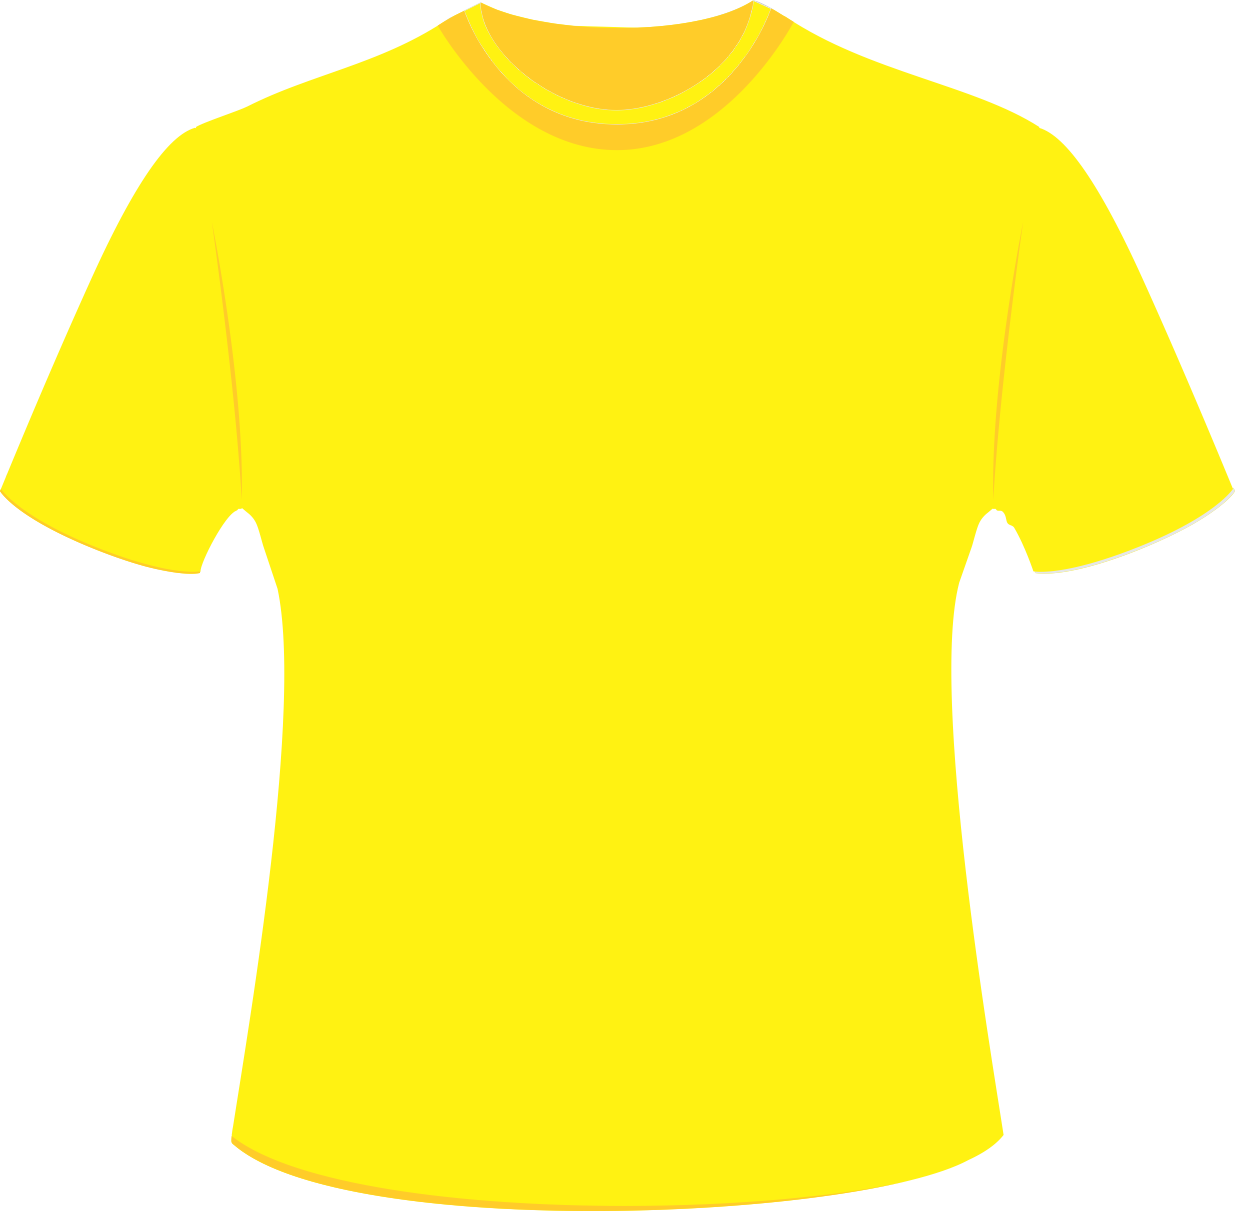 Mockup Camiseta Amarela Editável